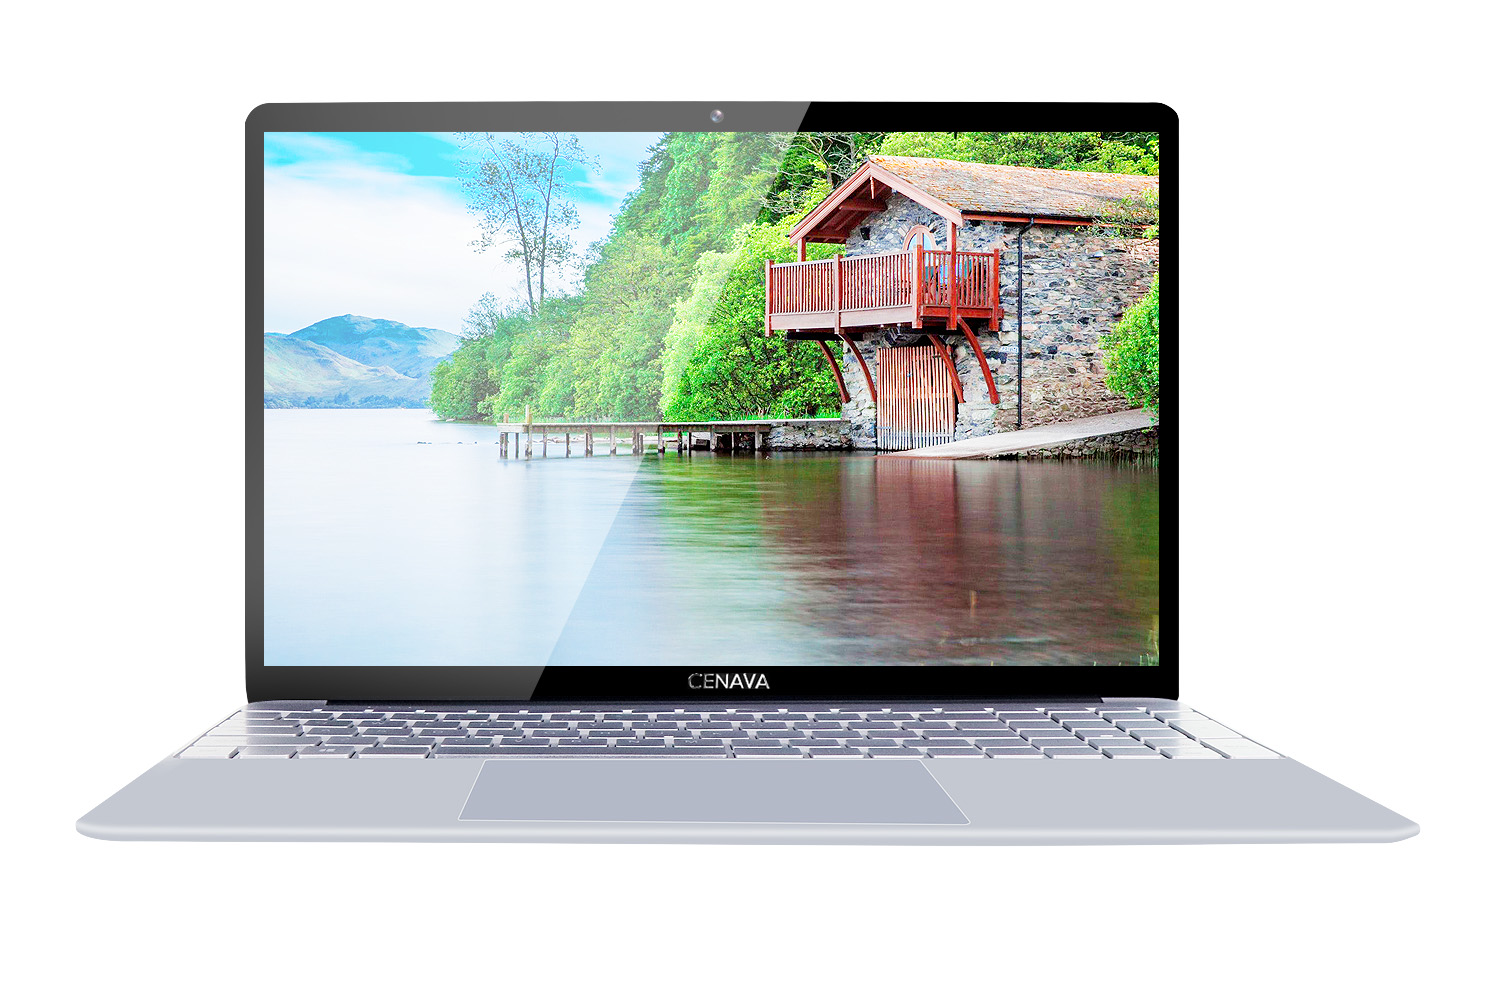 

CENAVA F151 Ноутбук 15,6-дюймовый Intel Core J3355 Intel HD Графика 500 Win10 6G RAM 256GB SSD ноутбук TN Экран